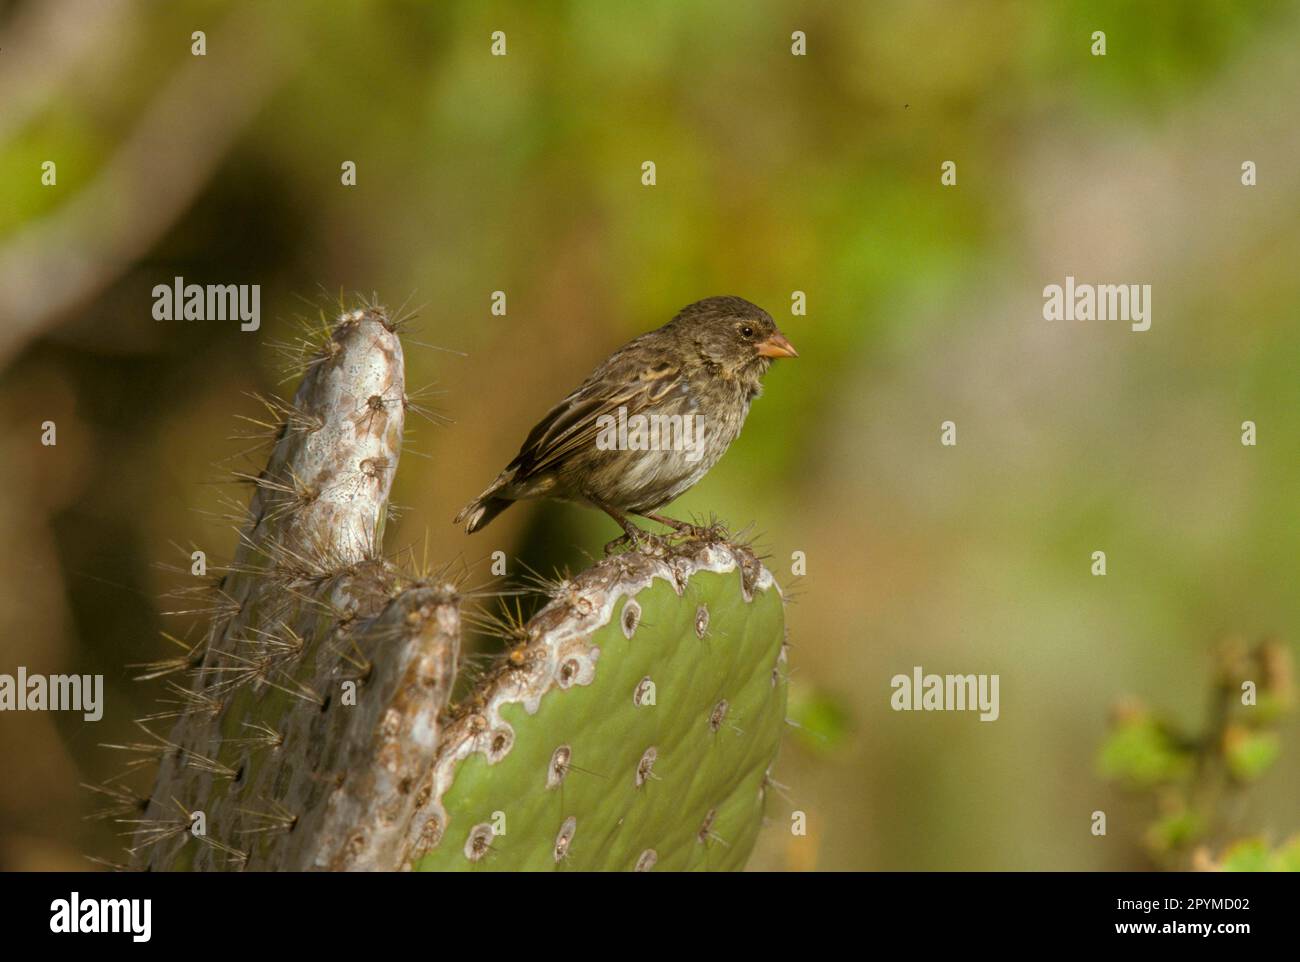 Small Ground Finch, Galapagos Finch, Darwin Finch, Galapagos Finches, Darwin Finches, Songbirds, Animals, Birds, Finches, Small Ground Finch Stock Photo